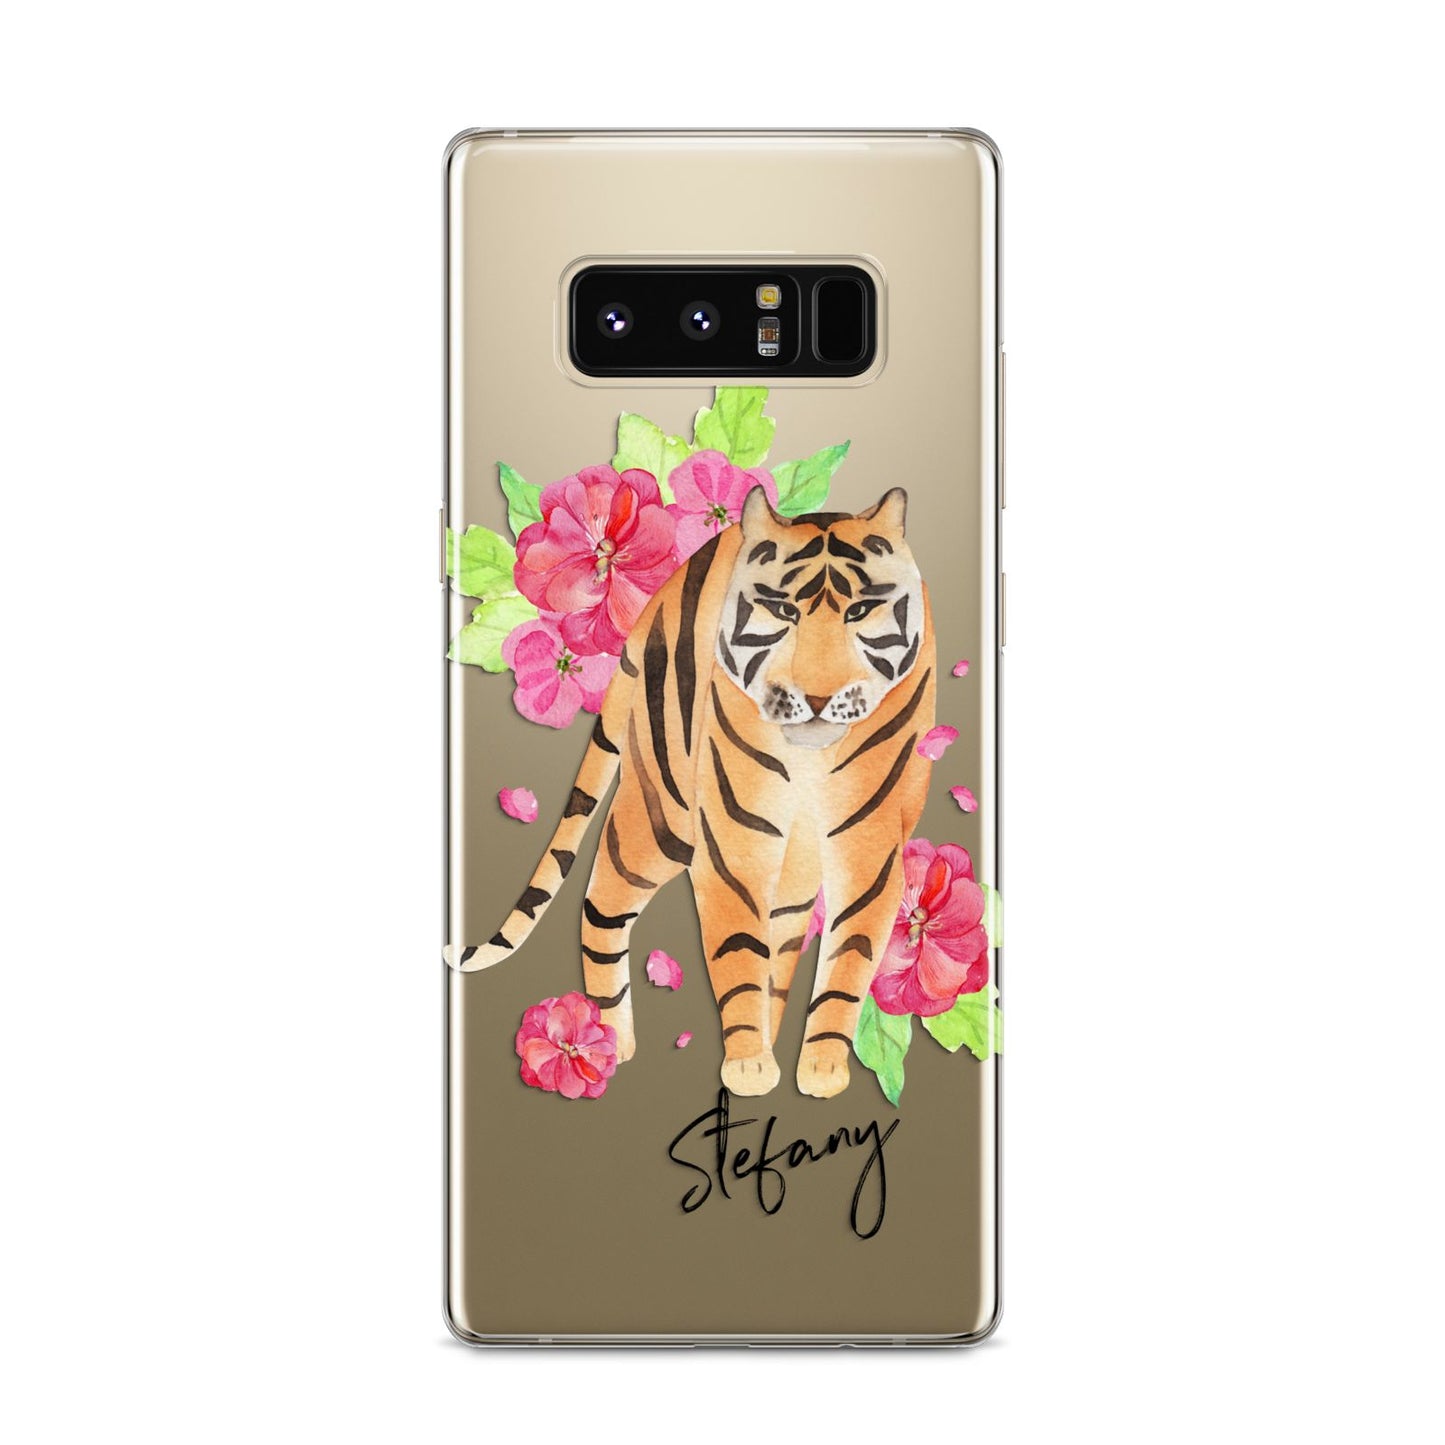 Personalised Tiger Samsung Galaxy S8 Case